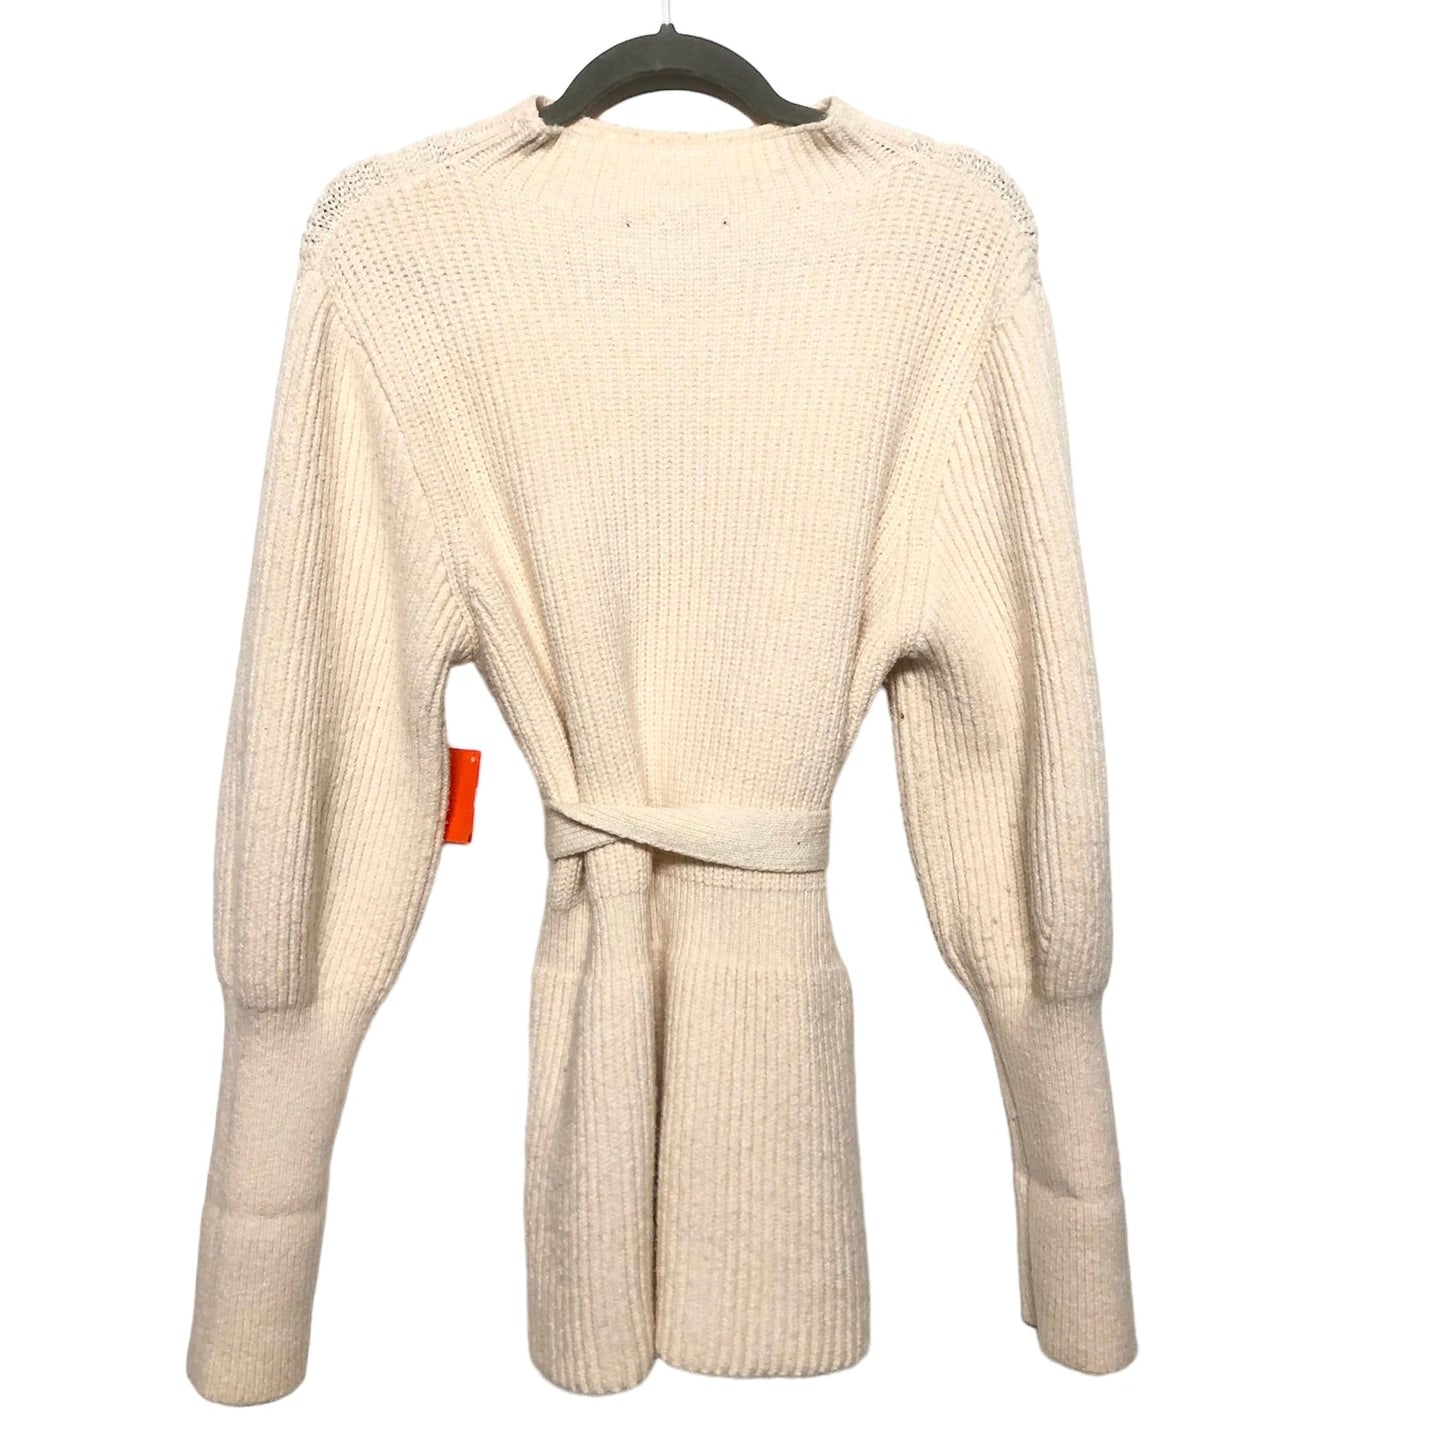 Sweater By Antonio Melani  Size: L